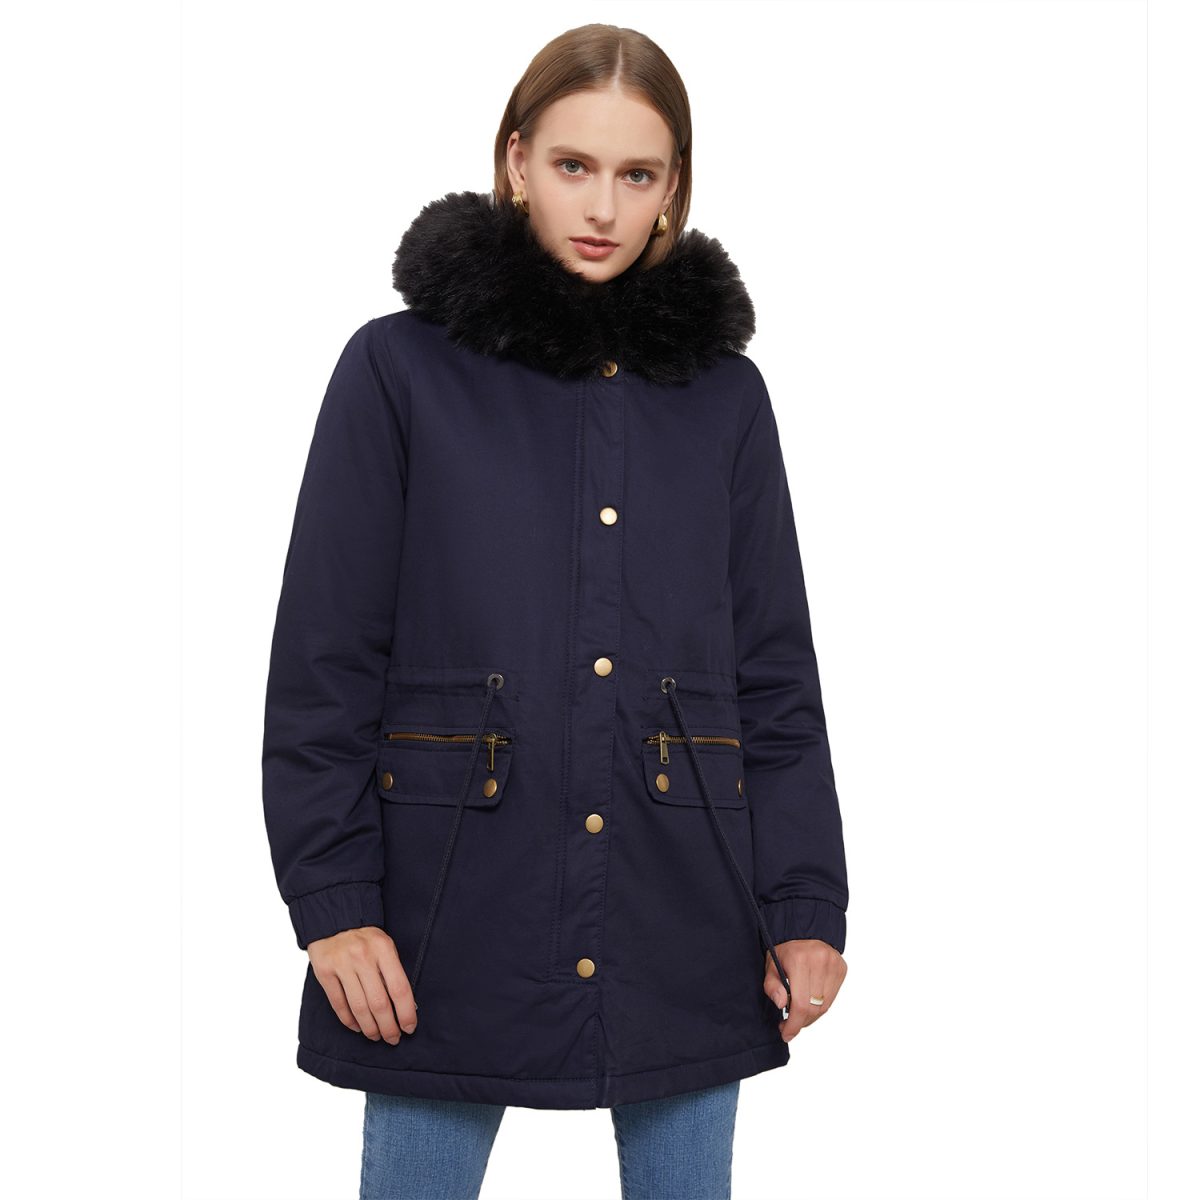 Autumn Winter Fleece Lined with Fur Collar Hooded Warm Coat Plus Size - Coats & Jackets - Uniqistic.com